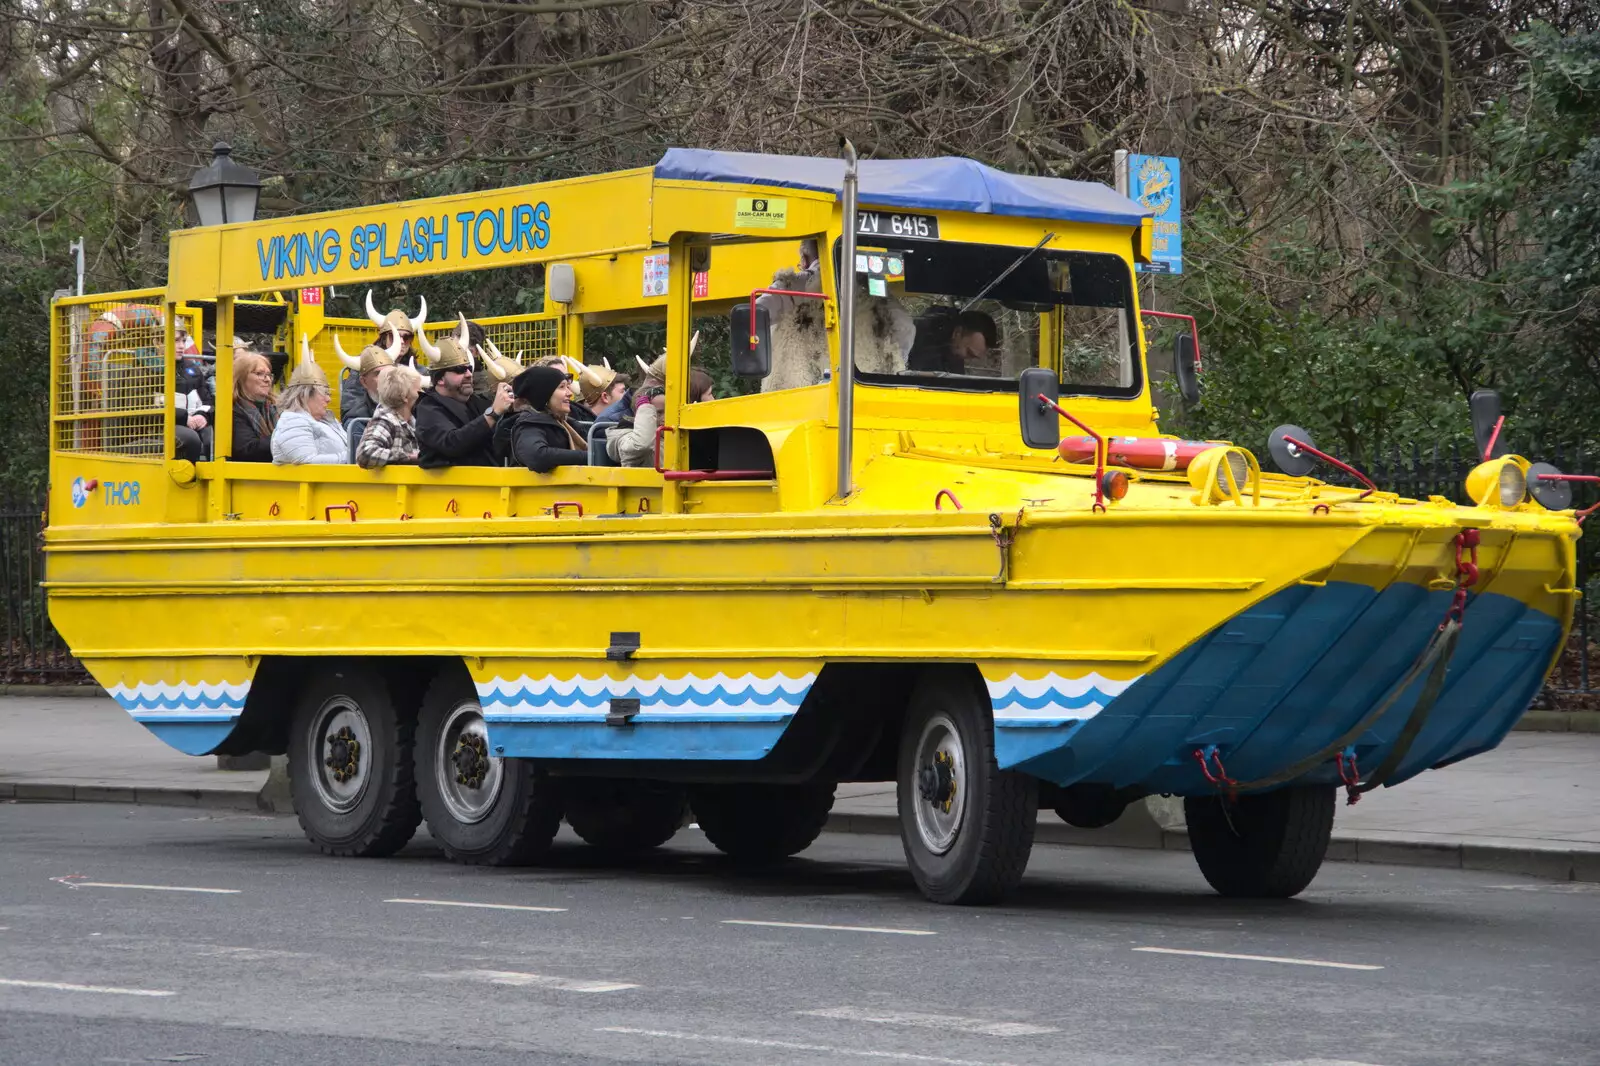 A Viking Splash Tour 'duck', from The Dead Zoo, Dublin, Ireland - 17th February 2023